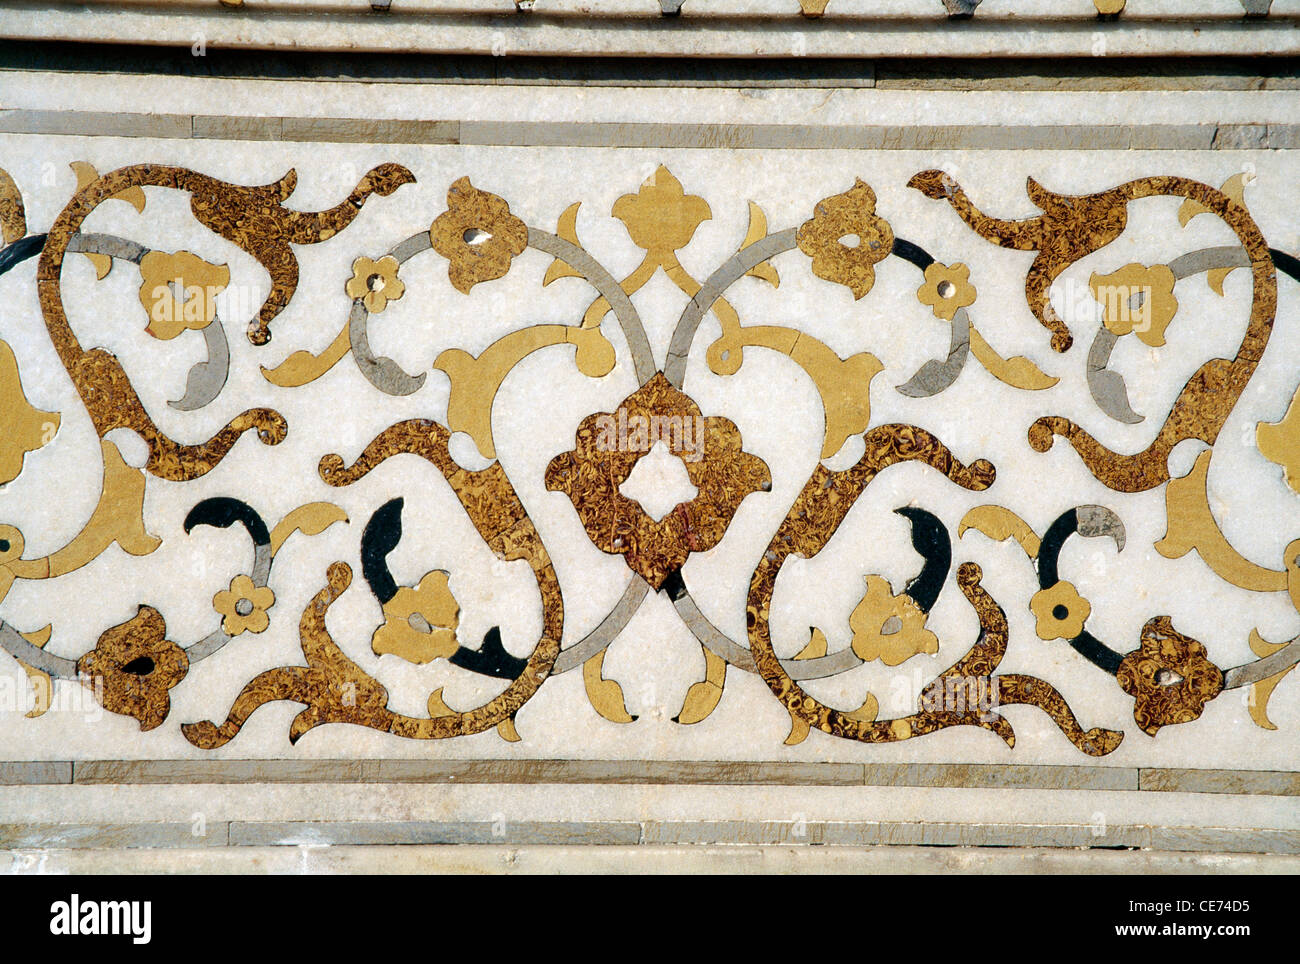 Pietra Dura work in Itimad ud Daula Itmad u Daula Tomb ; Agra ; Uttar Pradesh ; India ; Asia ; Indian ; Asian Stock Photo